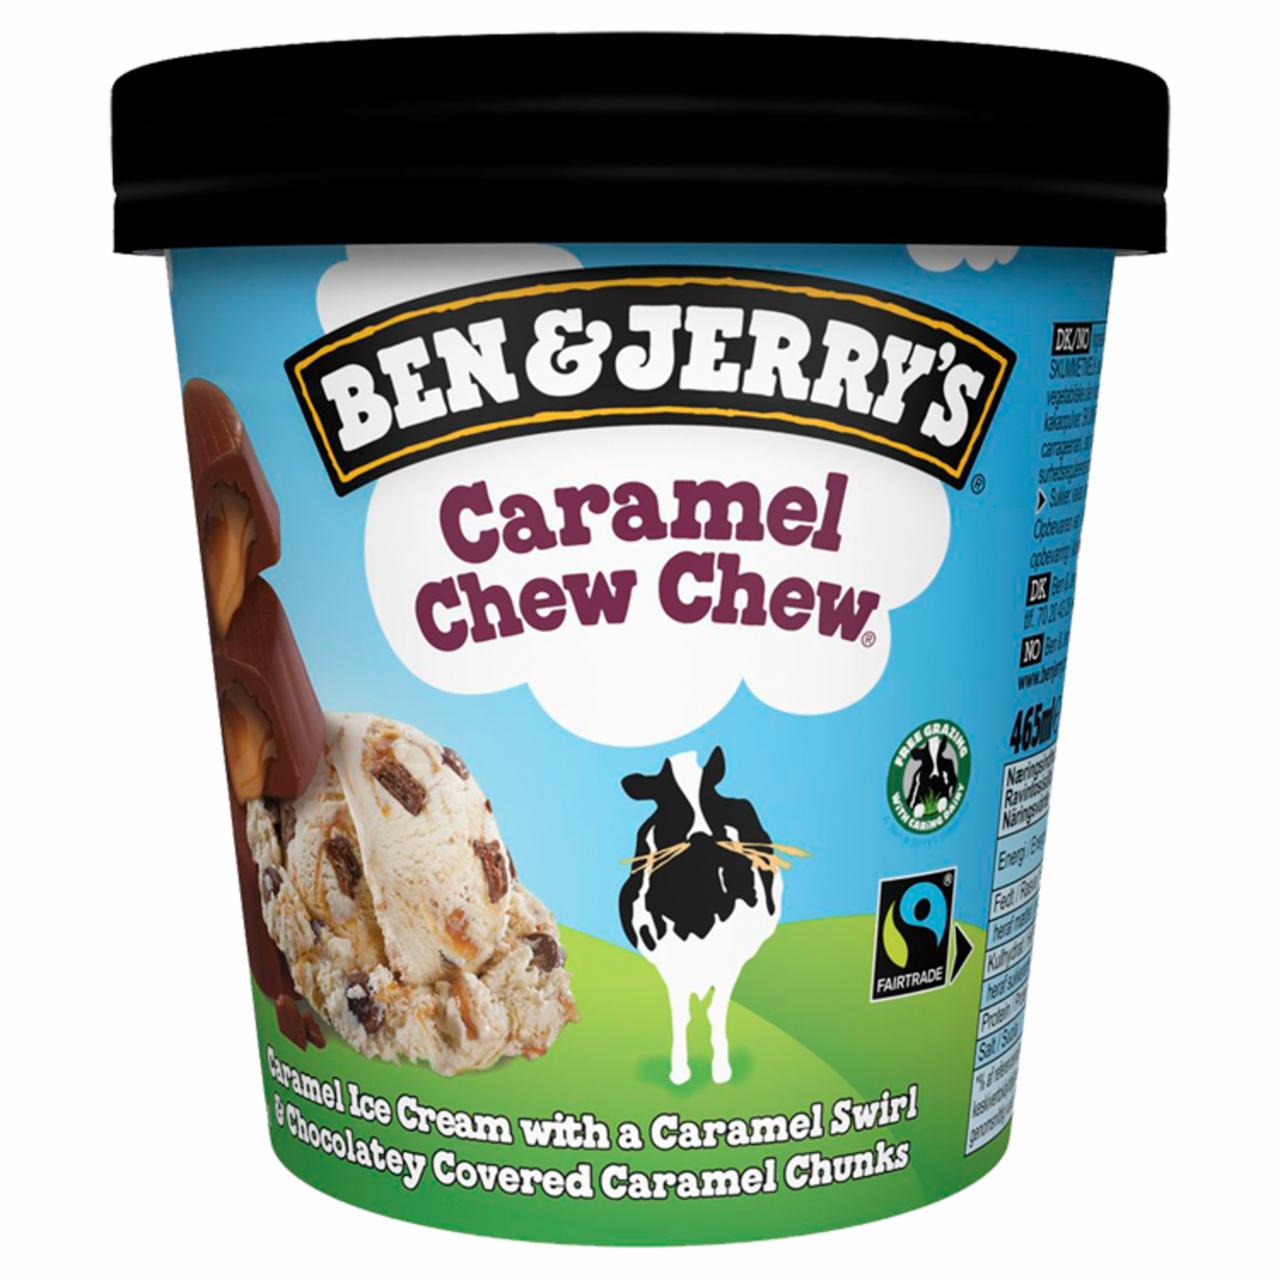 Képek - Ben & Jerry's poharas jégkrém Caramel Chew Chew 465 ml